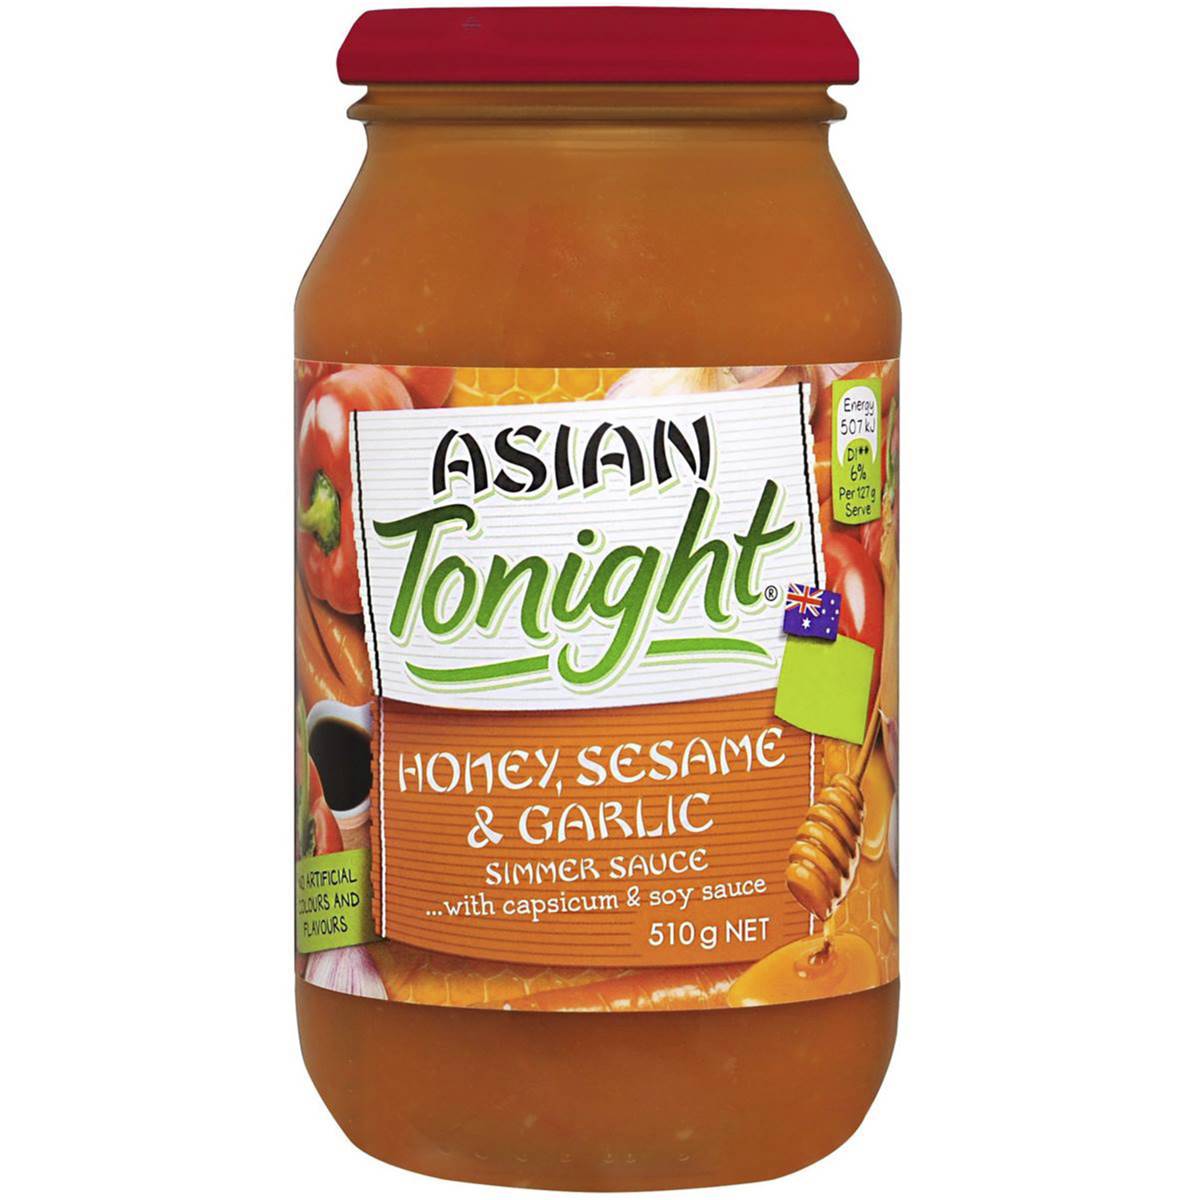 Asian Tonight Simmer Sauce Honey Sesame Garlic